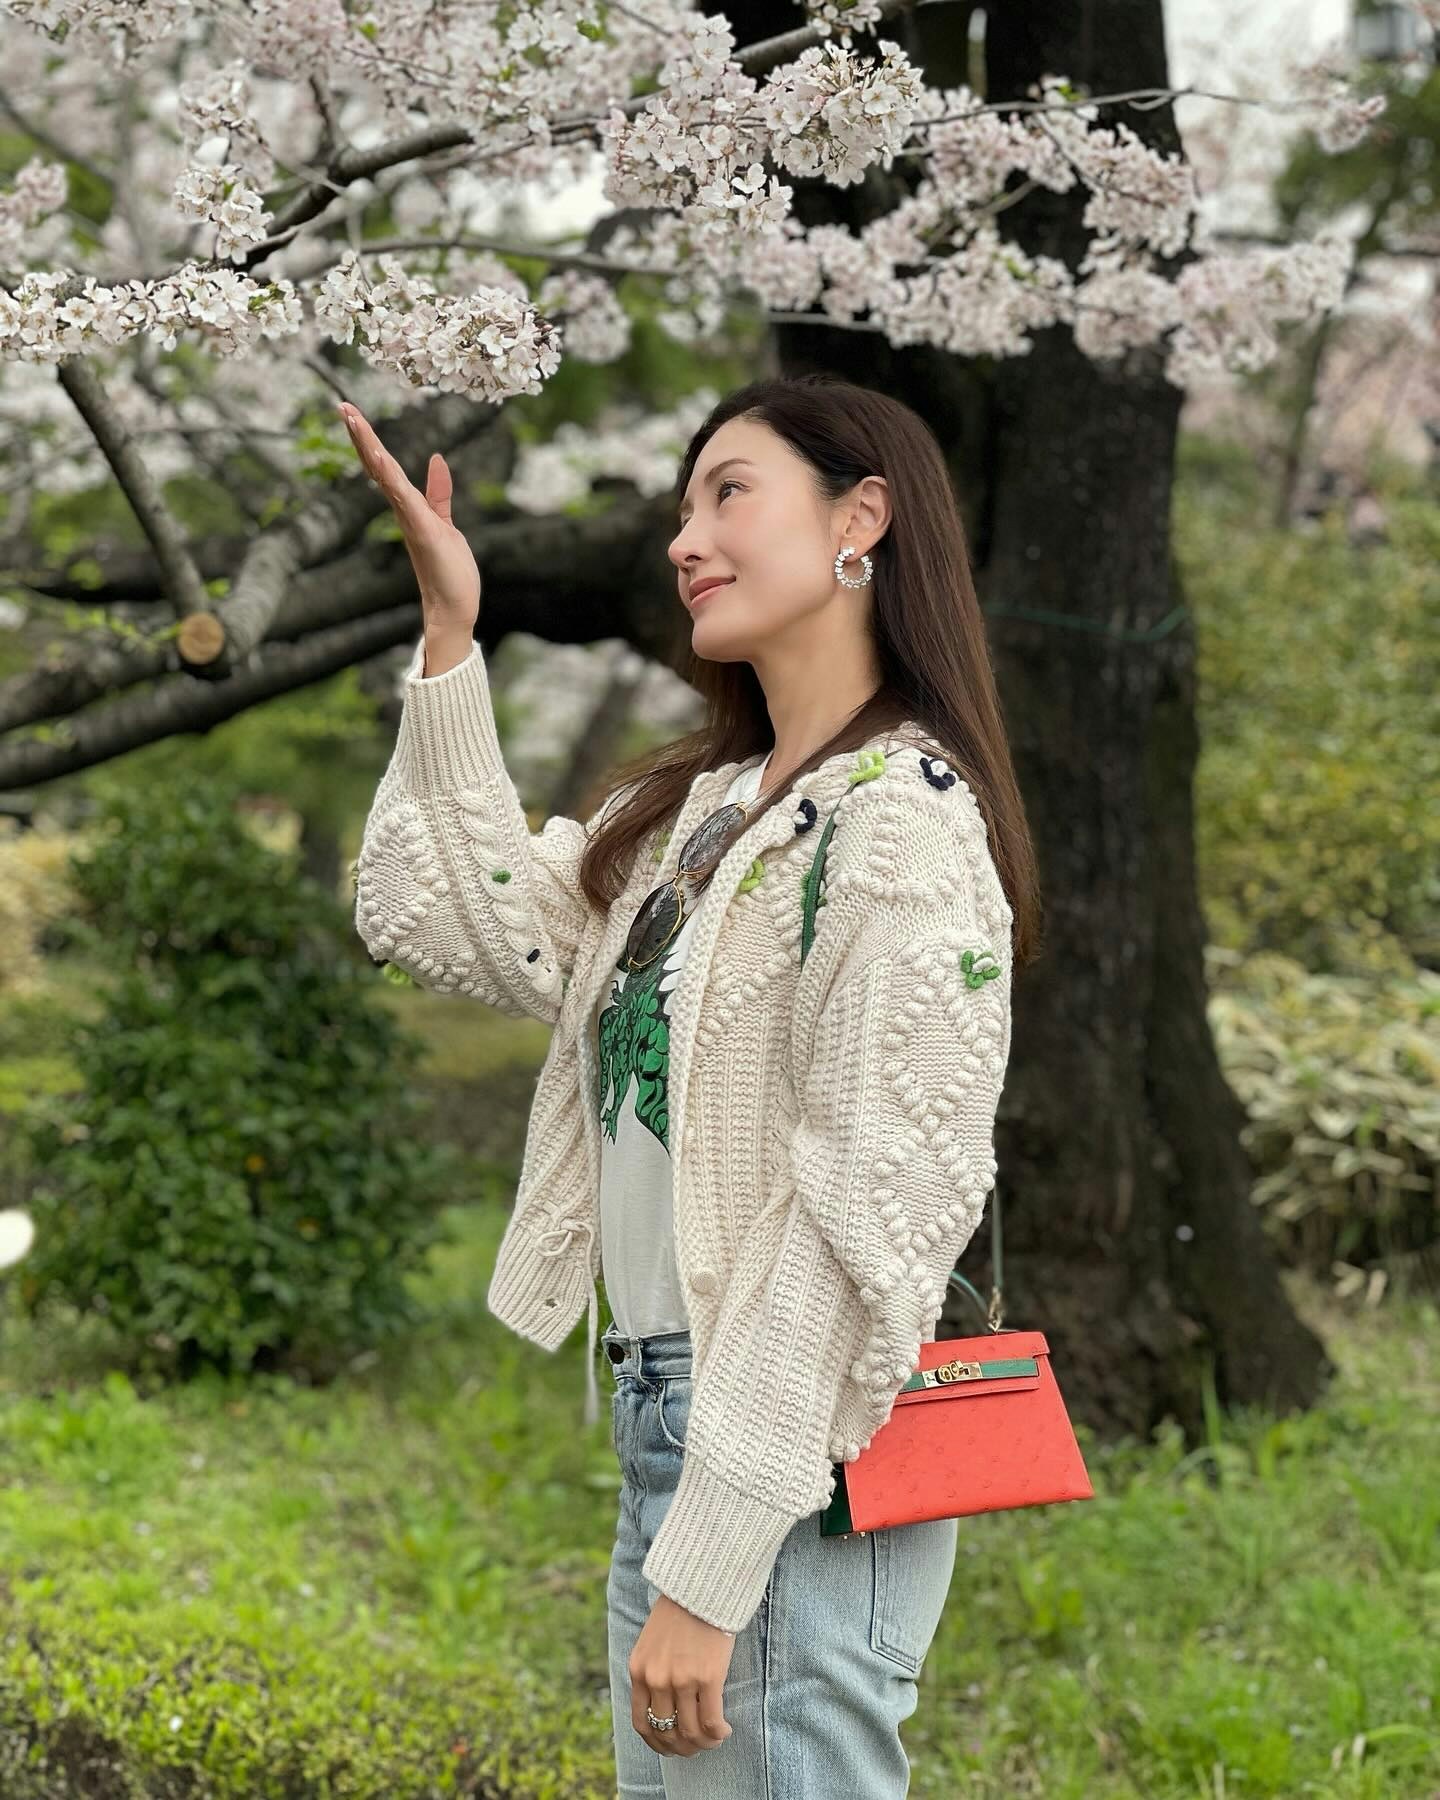 日本赏樱。（IG@michele_monique_reis）